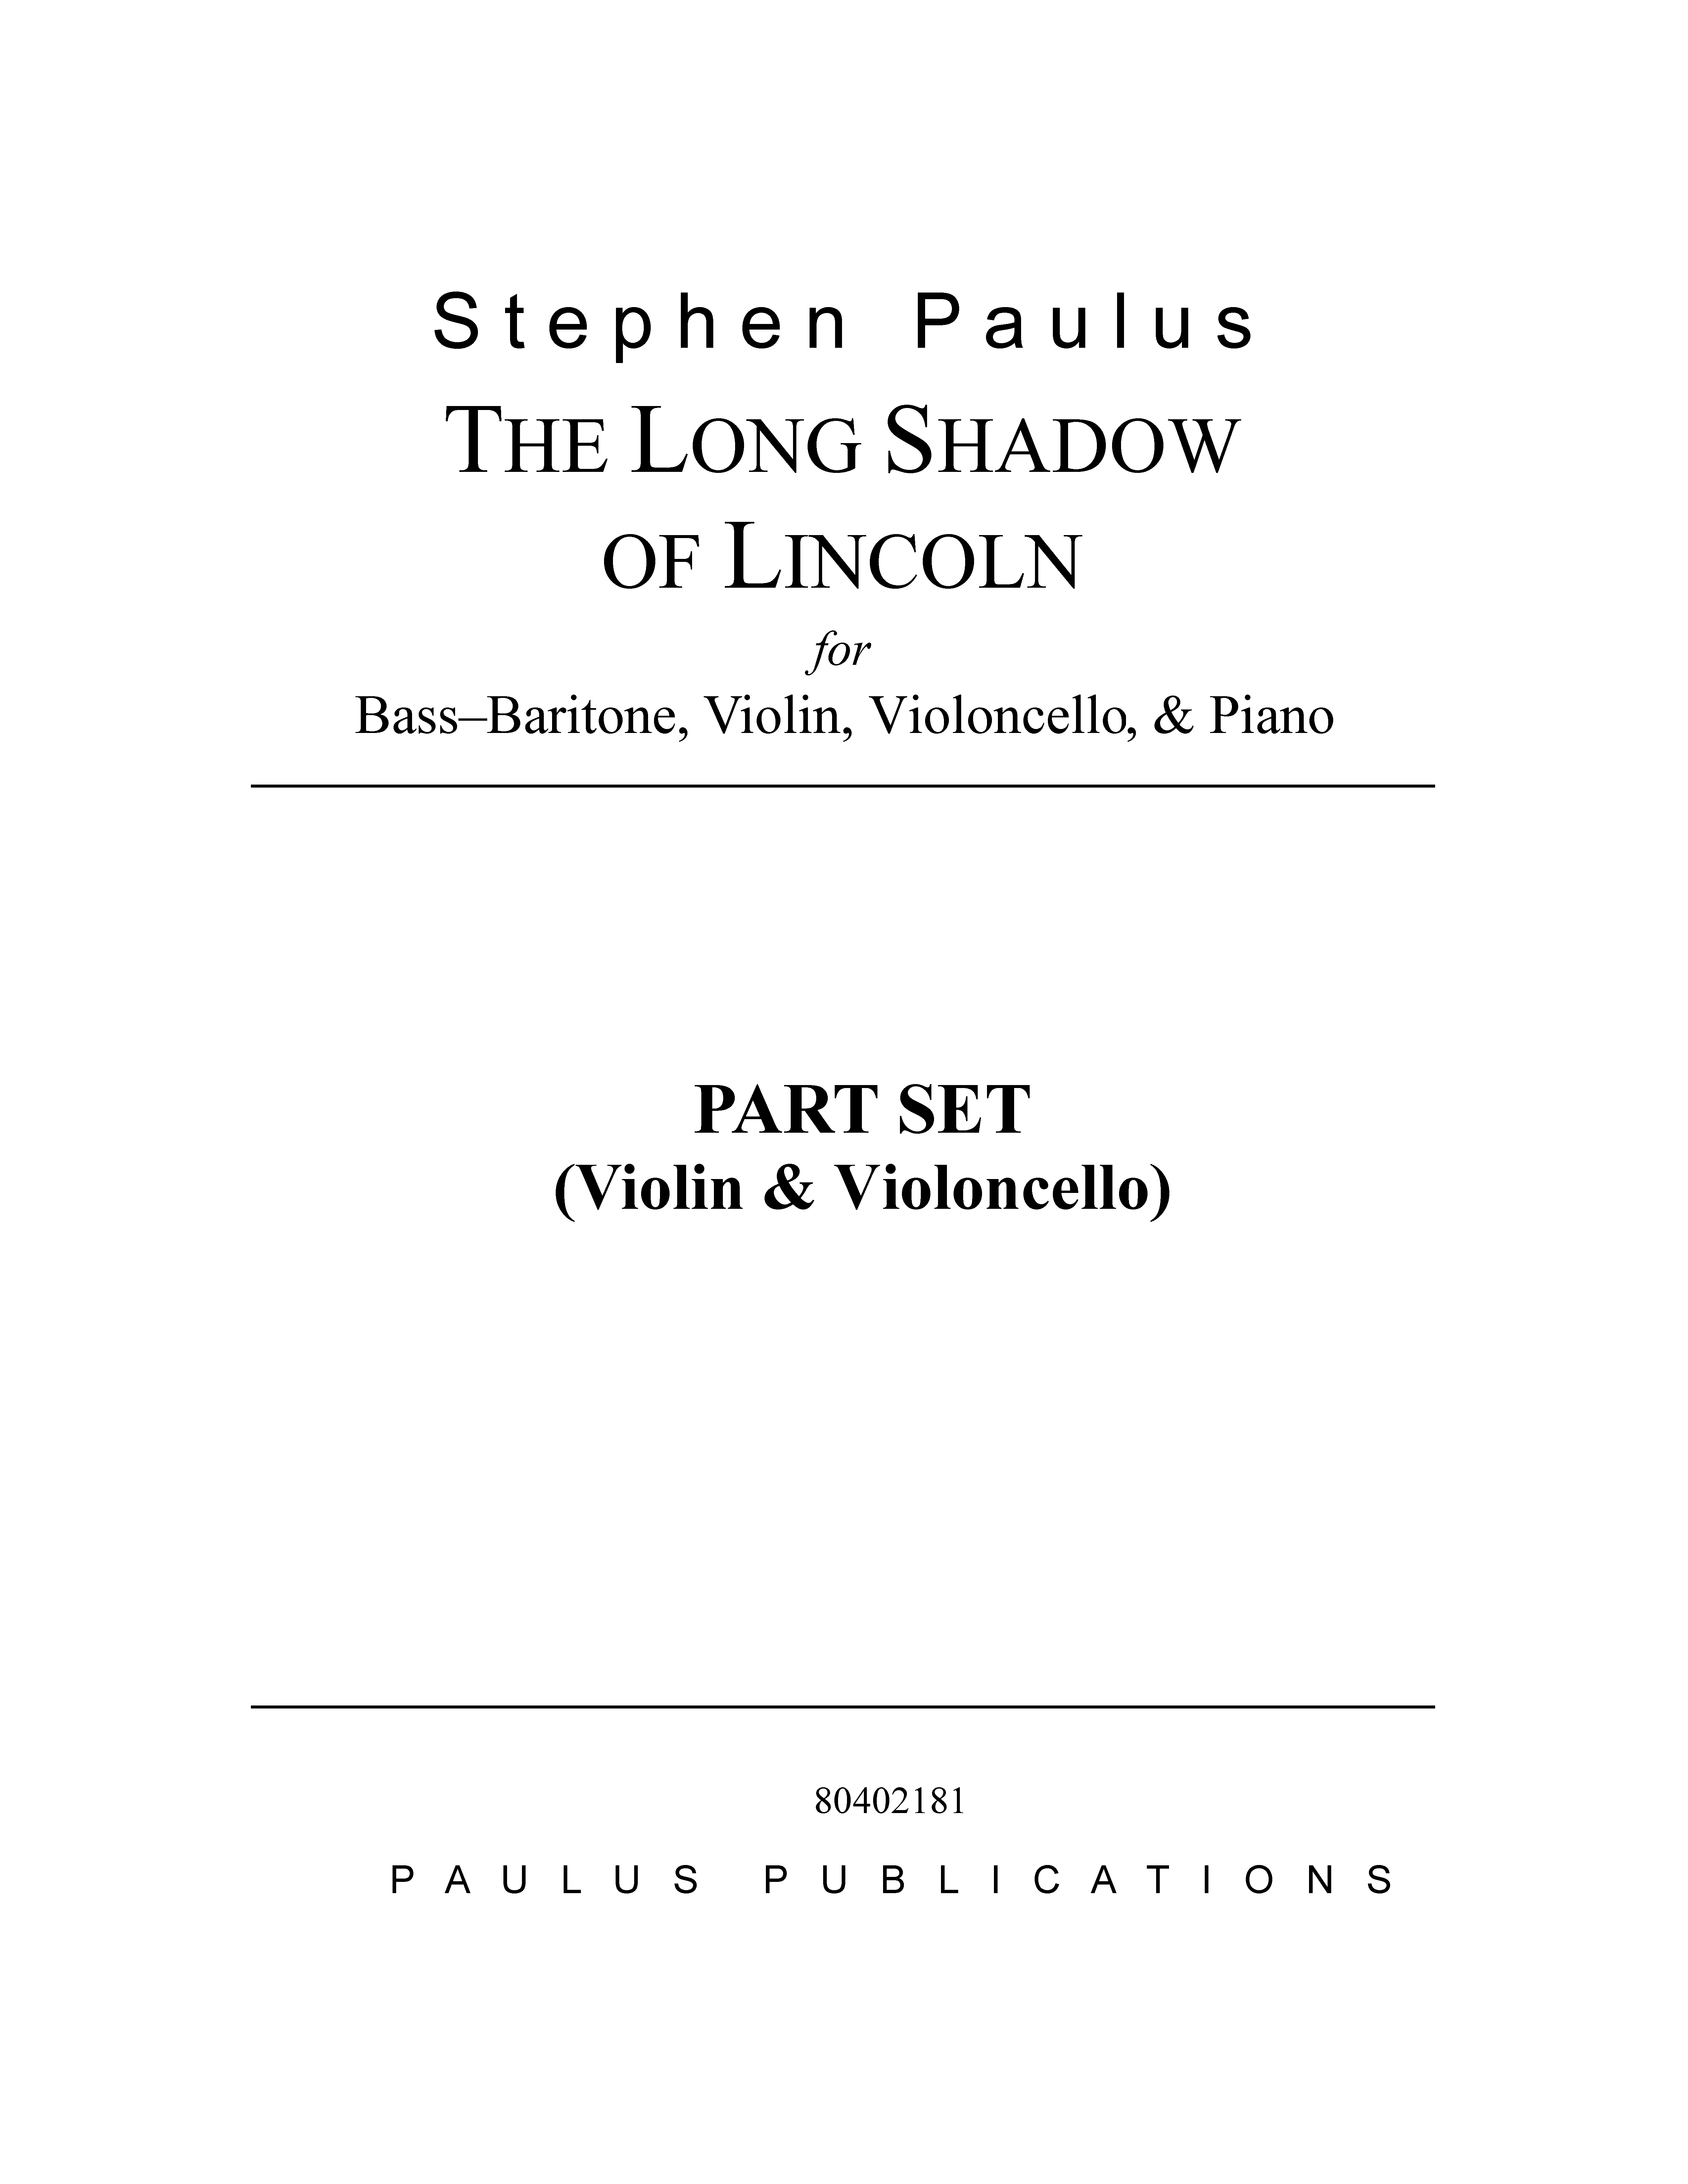 Long Shadow of Lincoln, The for Bass-Baritone, Violin, Violoncello & Piano - Click Image to Close